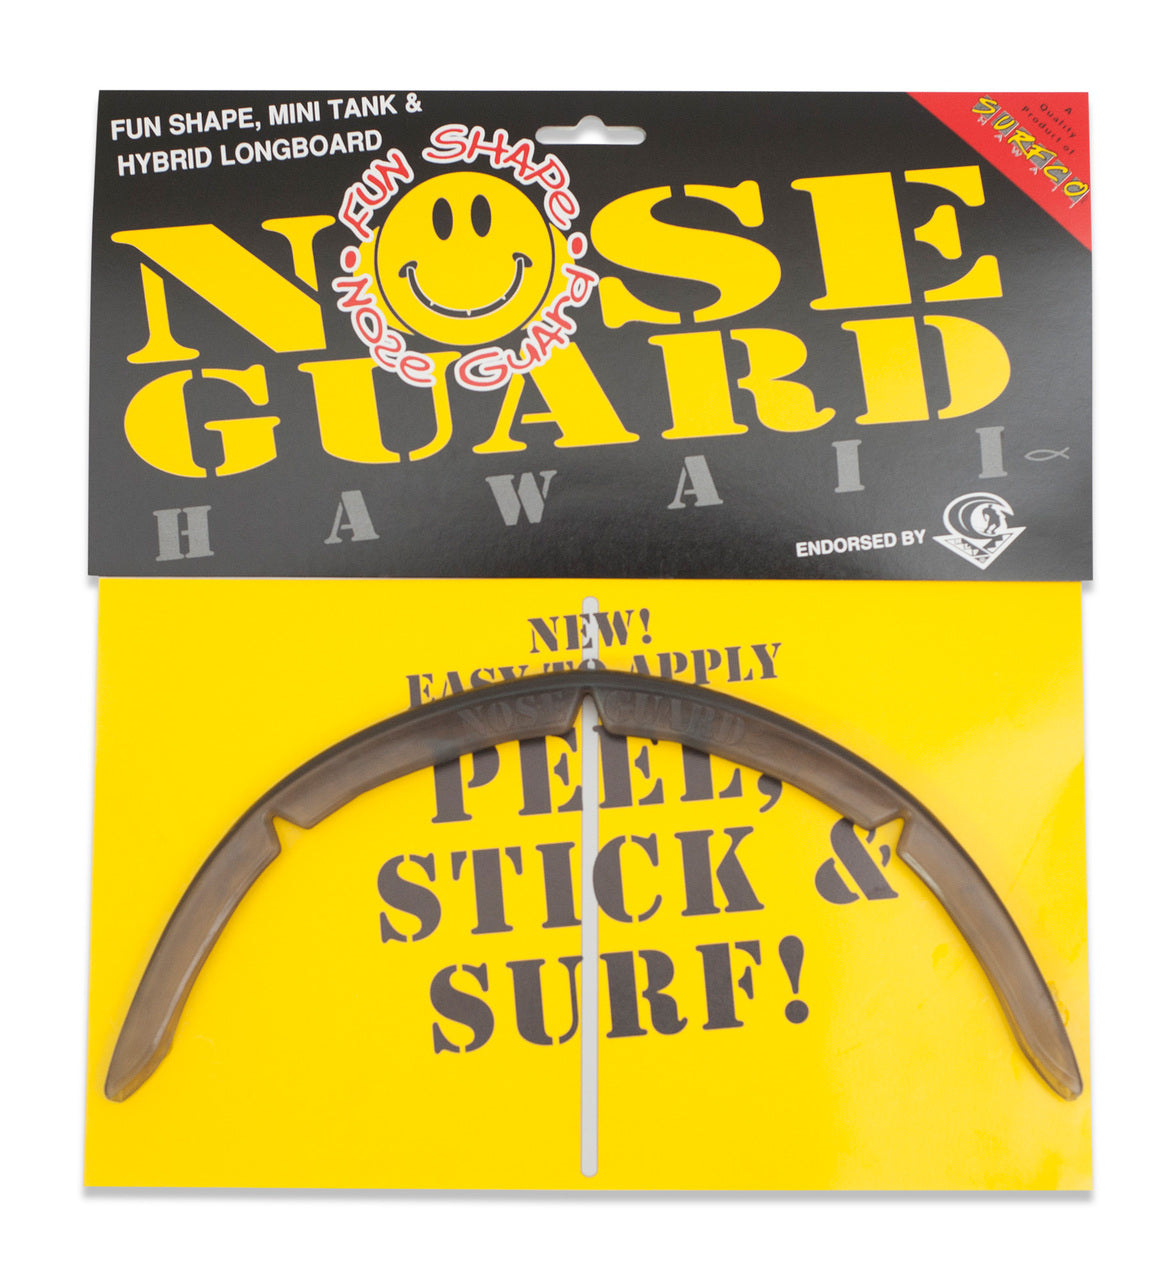 Fun Shape Nose Guard Kit